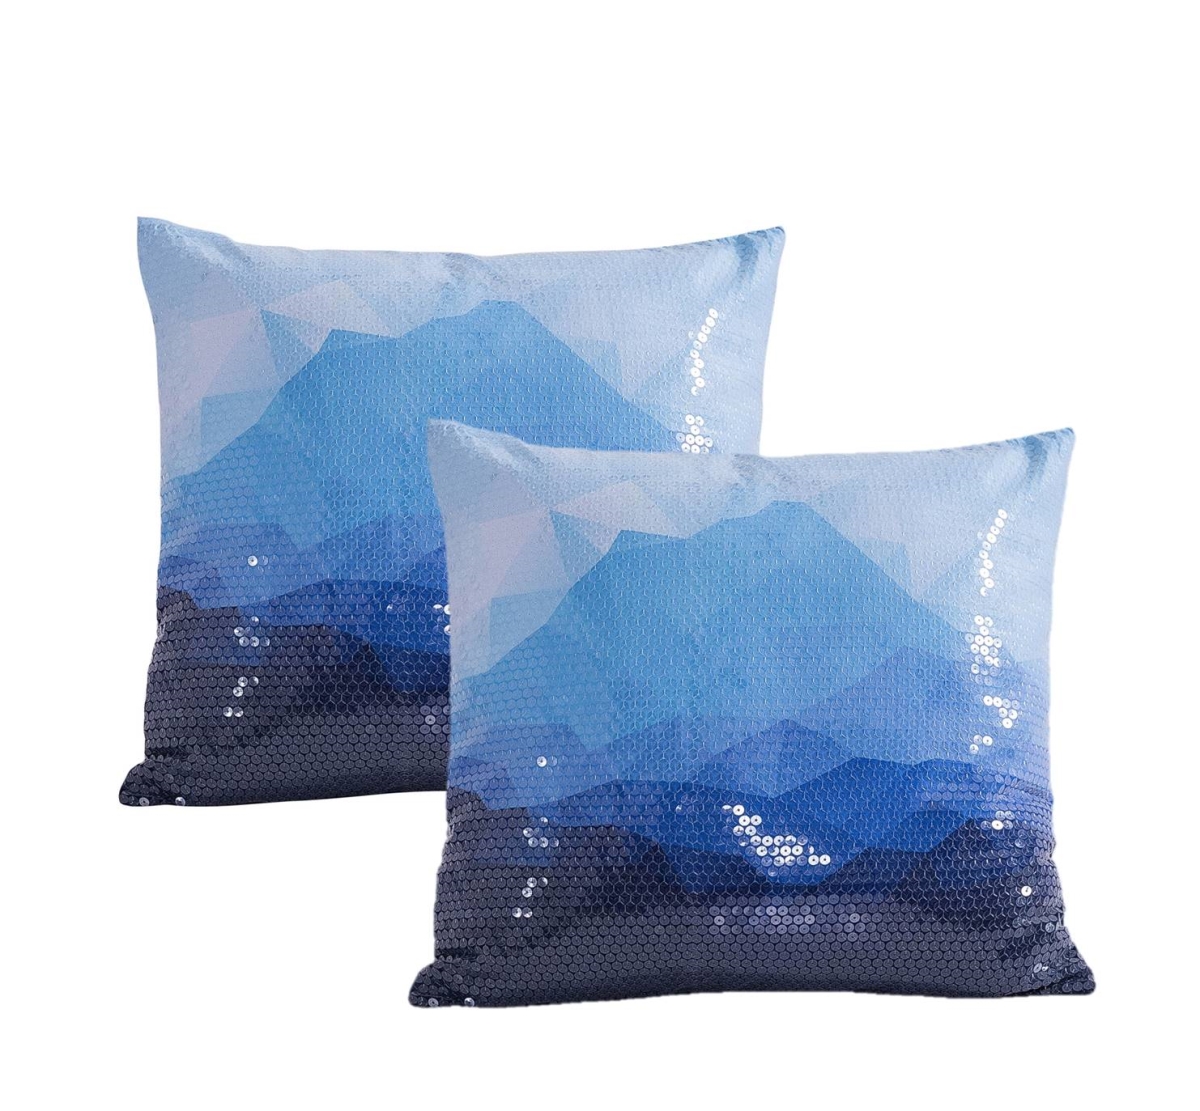 Scu-181-blu Sequin Printed Pillow Cover, Blue - Set Of 2